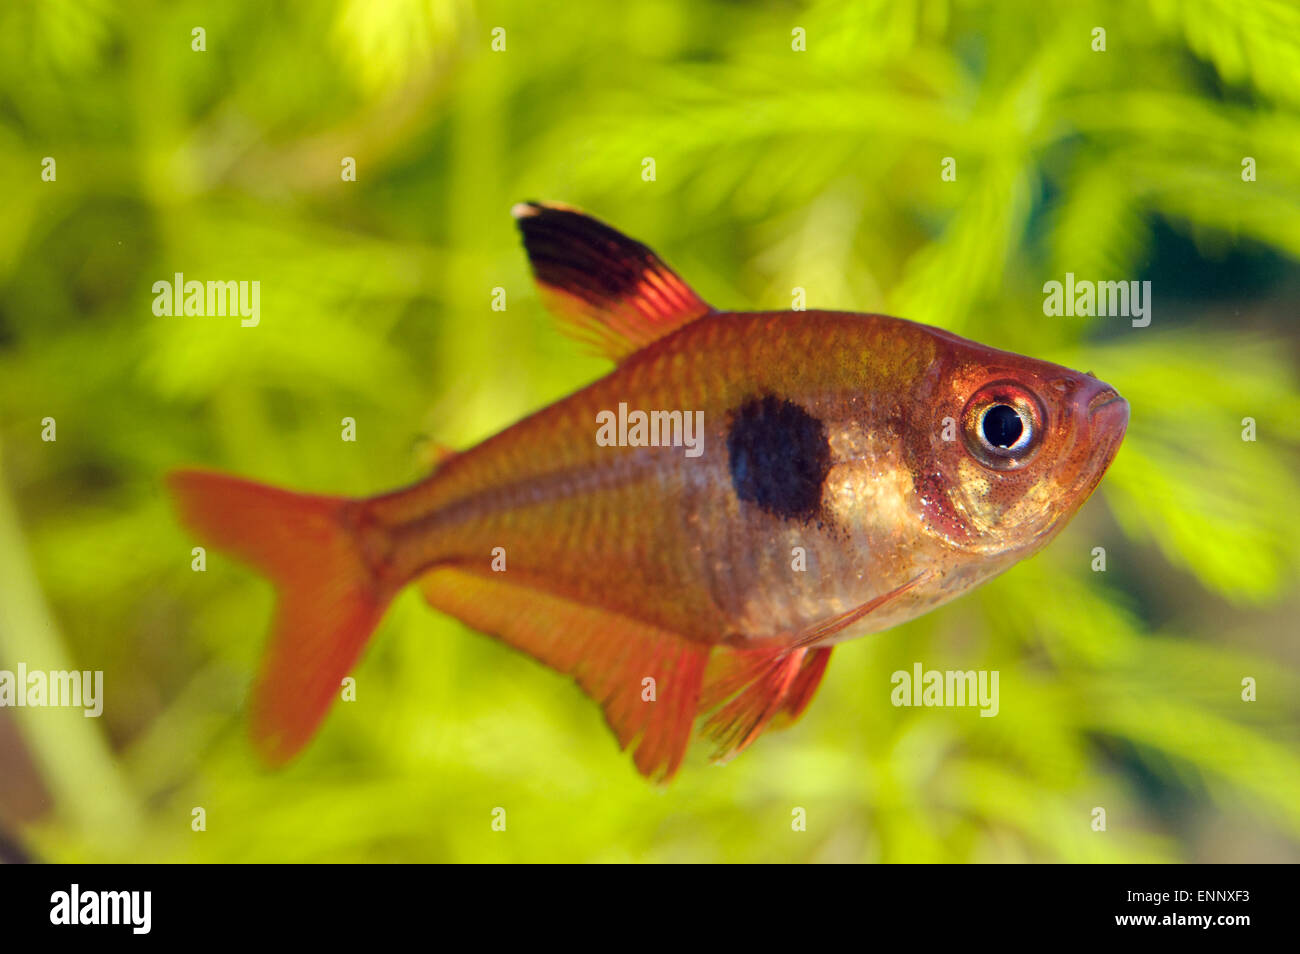 Nice red tetra fish from genus Hyphessobrycon. Stock Photo